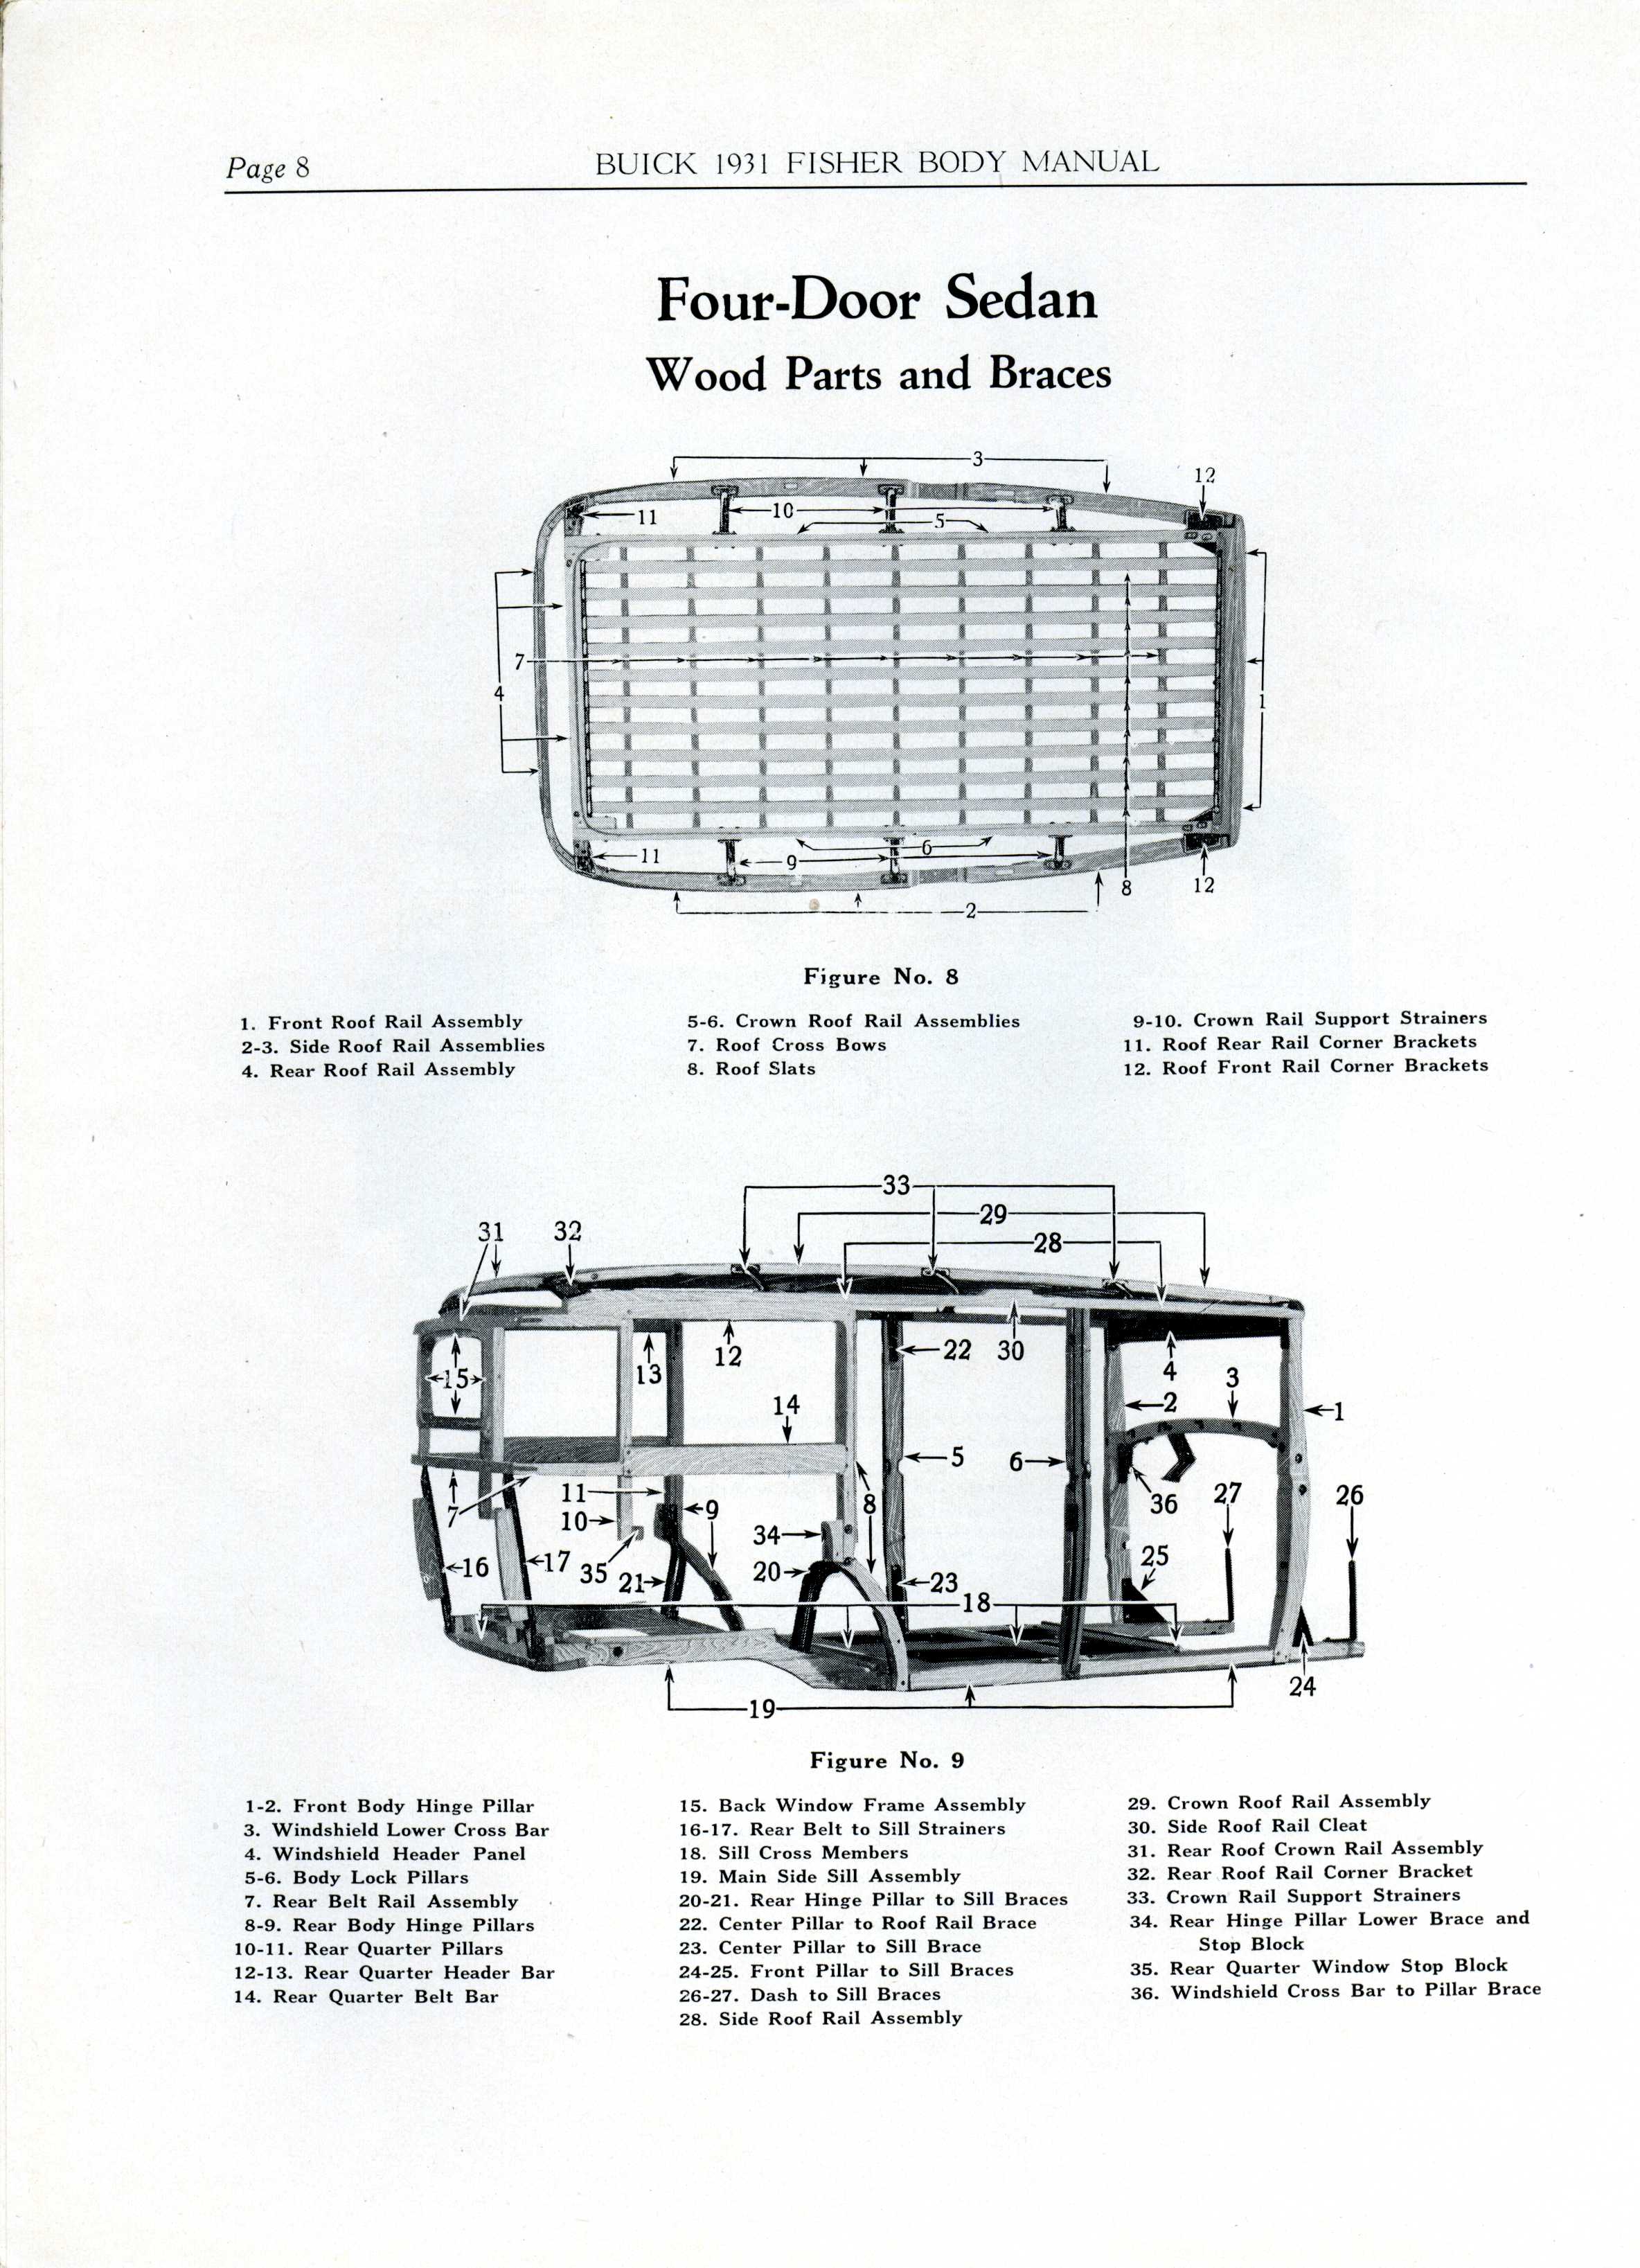 1931 Buick Fisher Body Manual-08